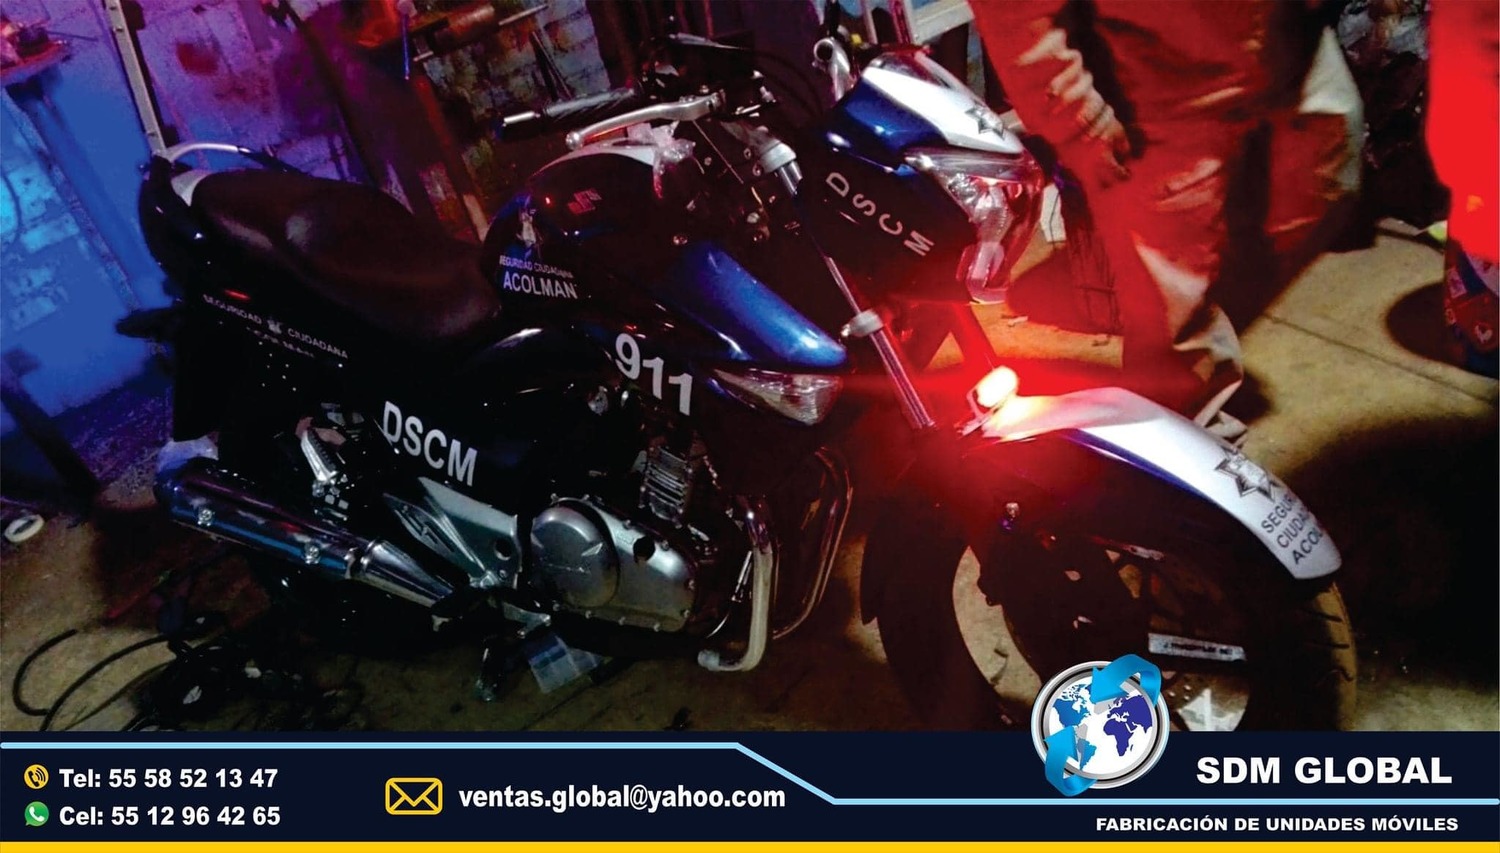 <span style="font-weight: bold;">Fabrica de Moto Patrullas Pick Up en Sdm Global Mexico</span><br>